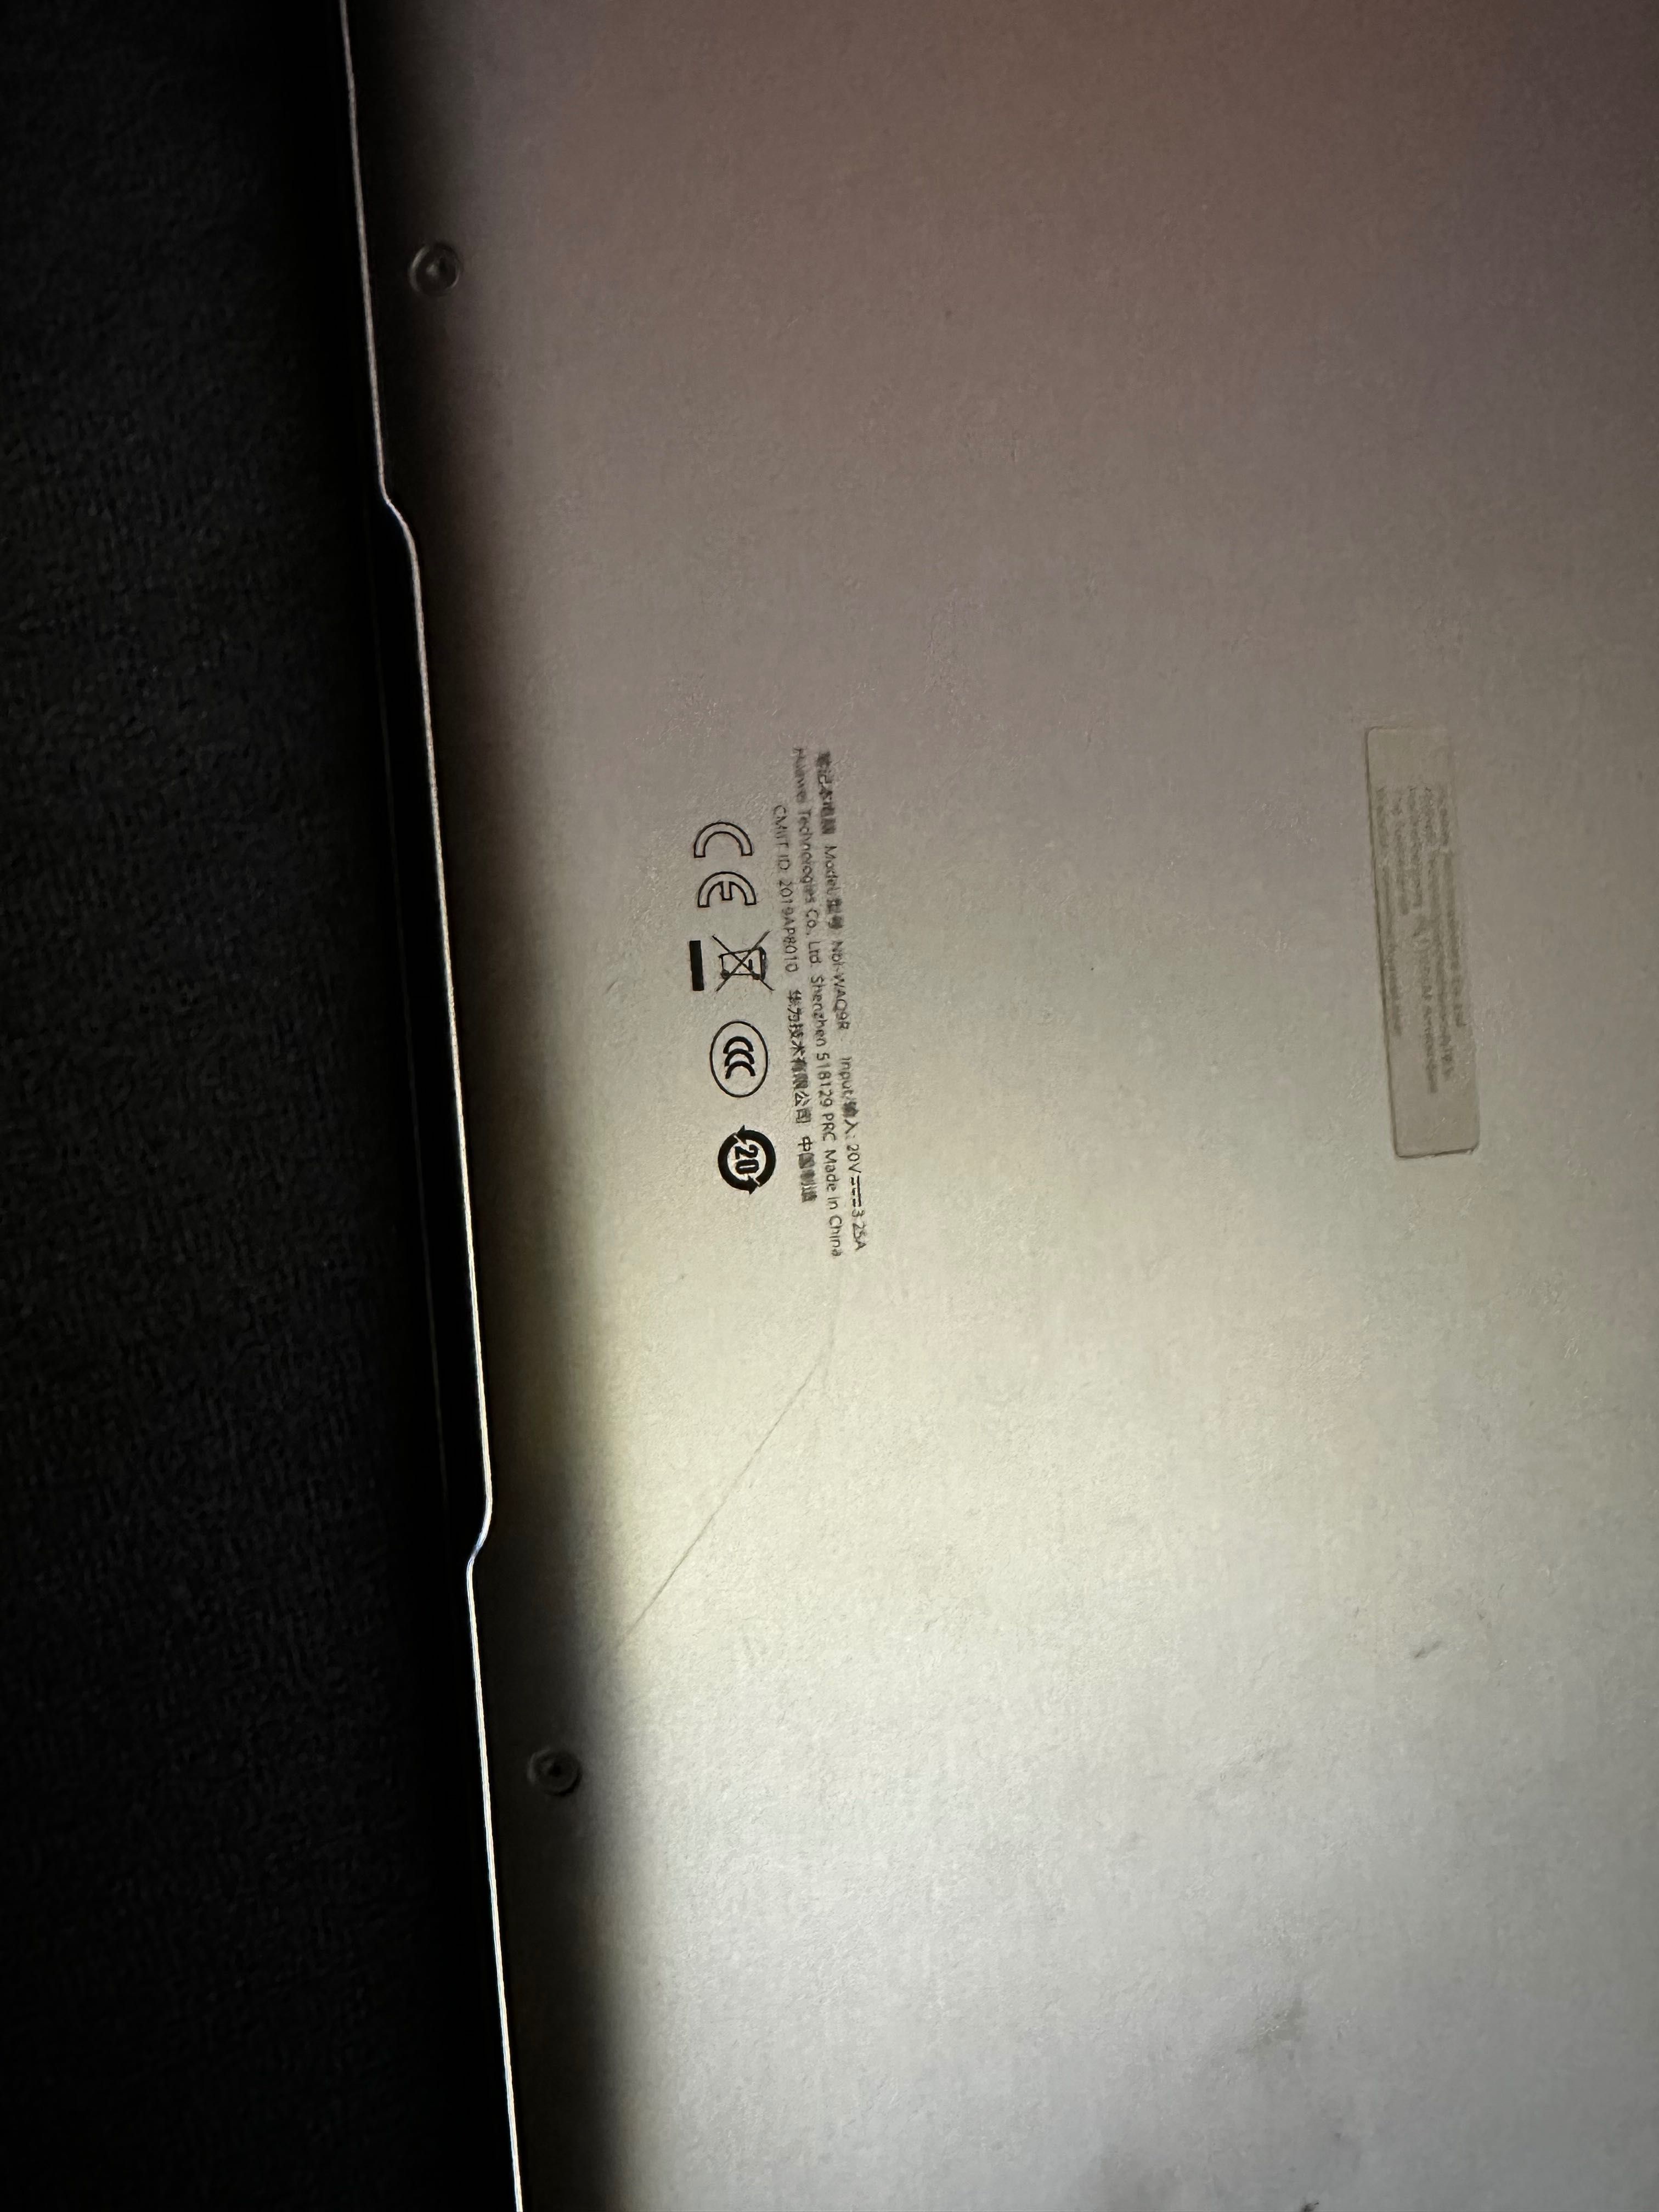 Laptop Huawei MateBook D14 Ryzen 5/8GB RAM/324GB